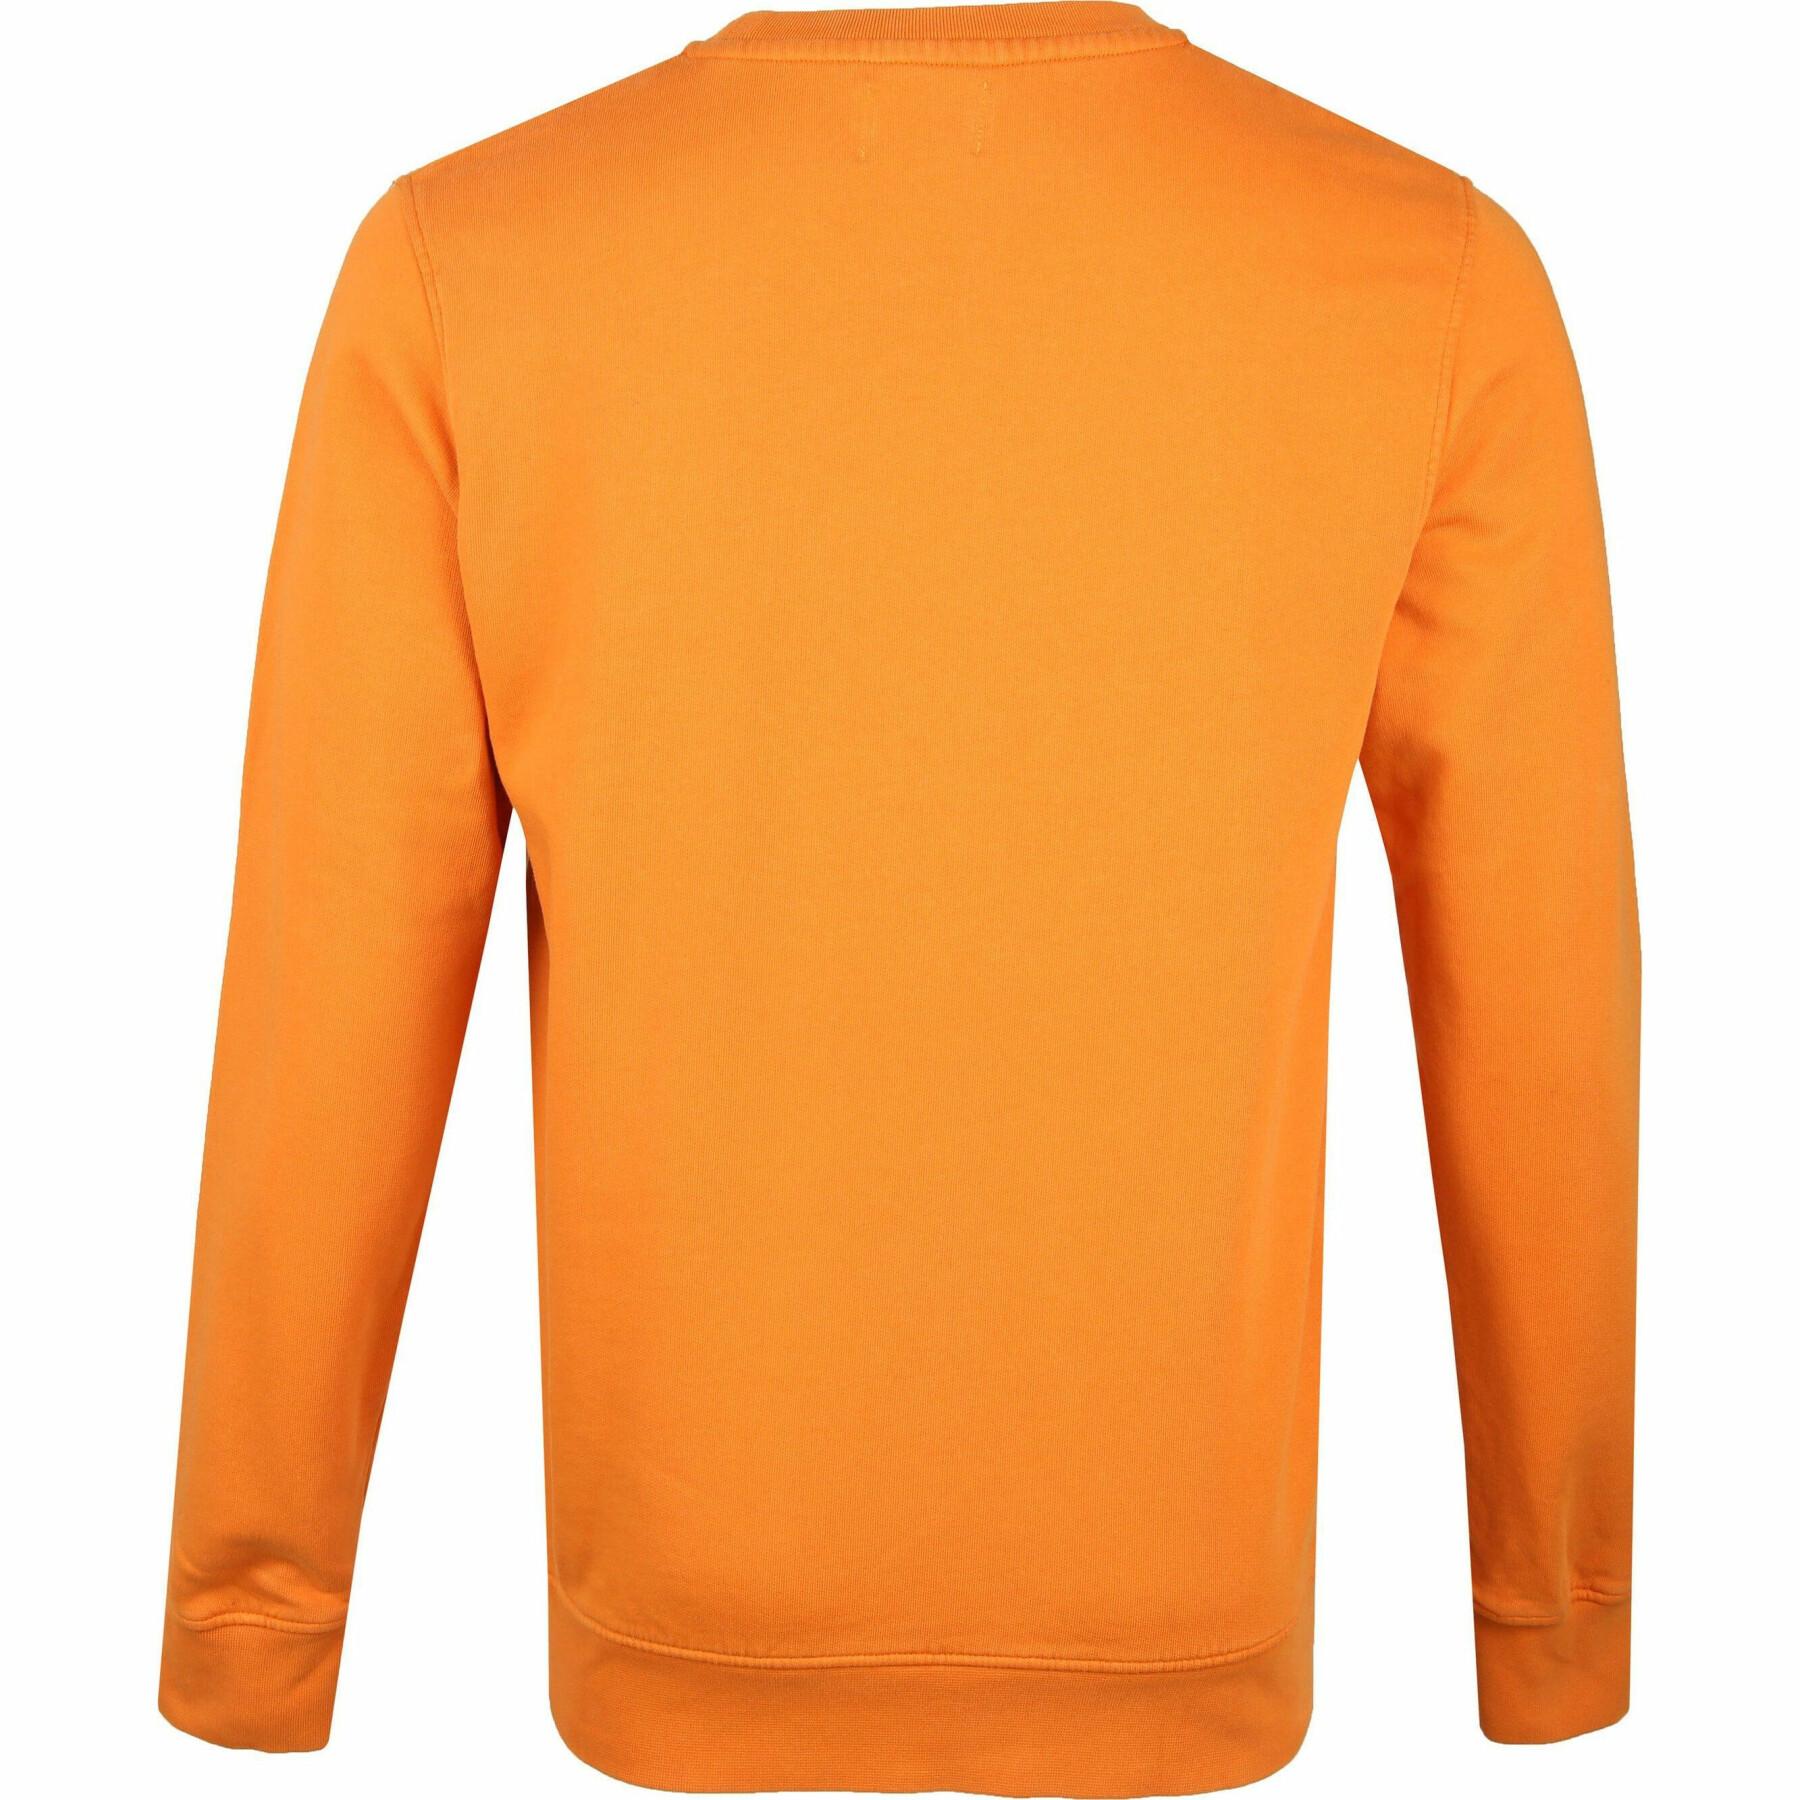 Sweatshirt mit Rundhalsausschnitt Colorful Standard Classic Organic burned orange